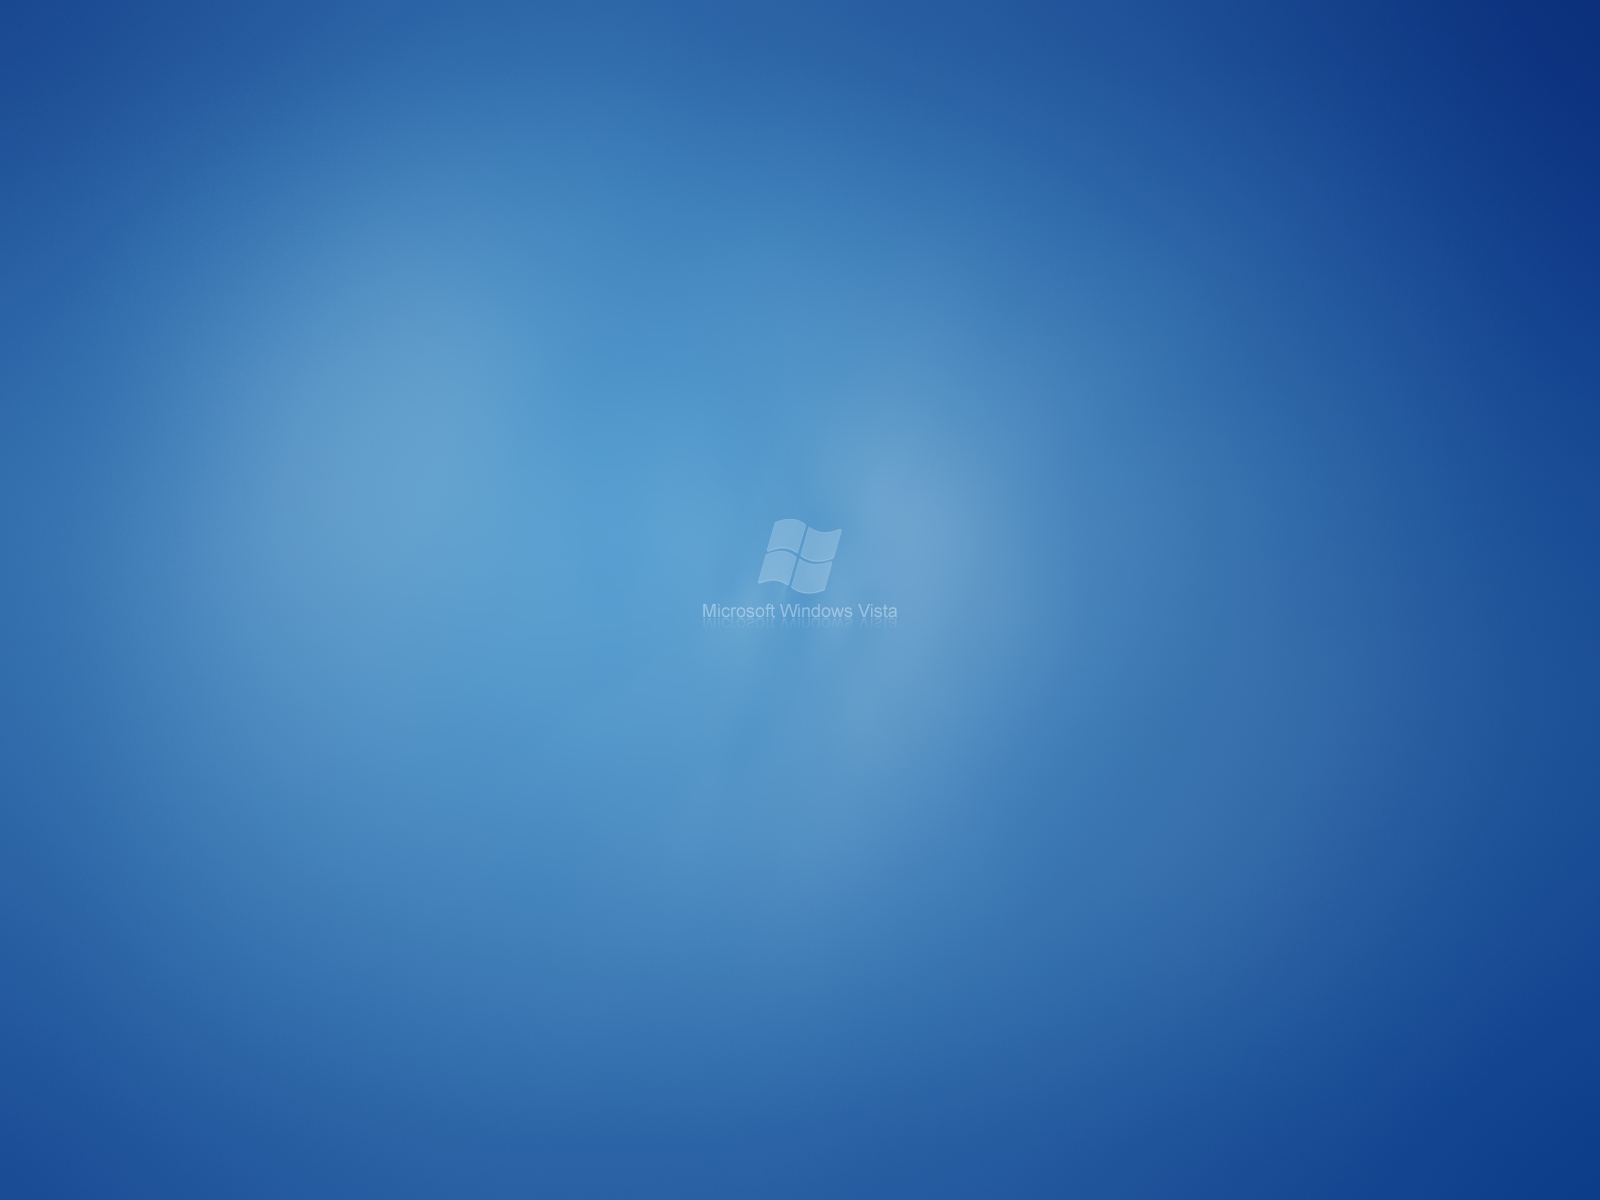 Discrete Blue Microsoft Windows Vista Wallpaper Geekpedia